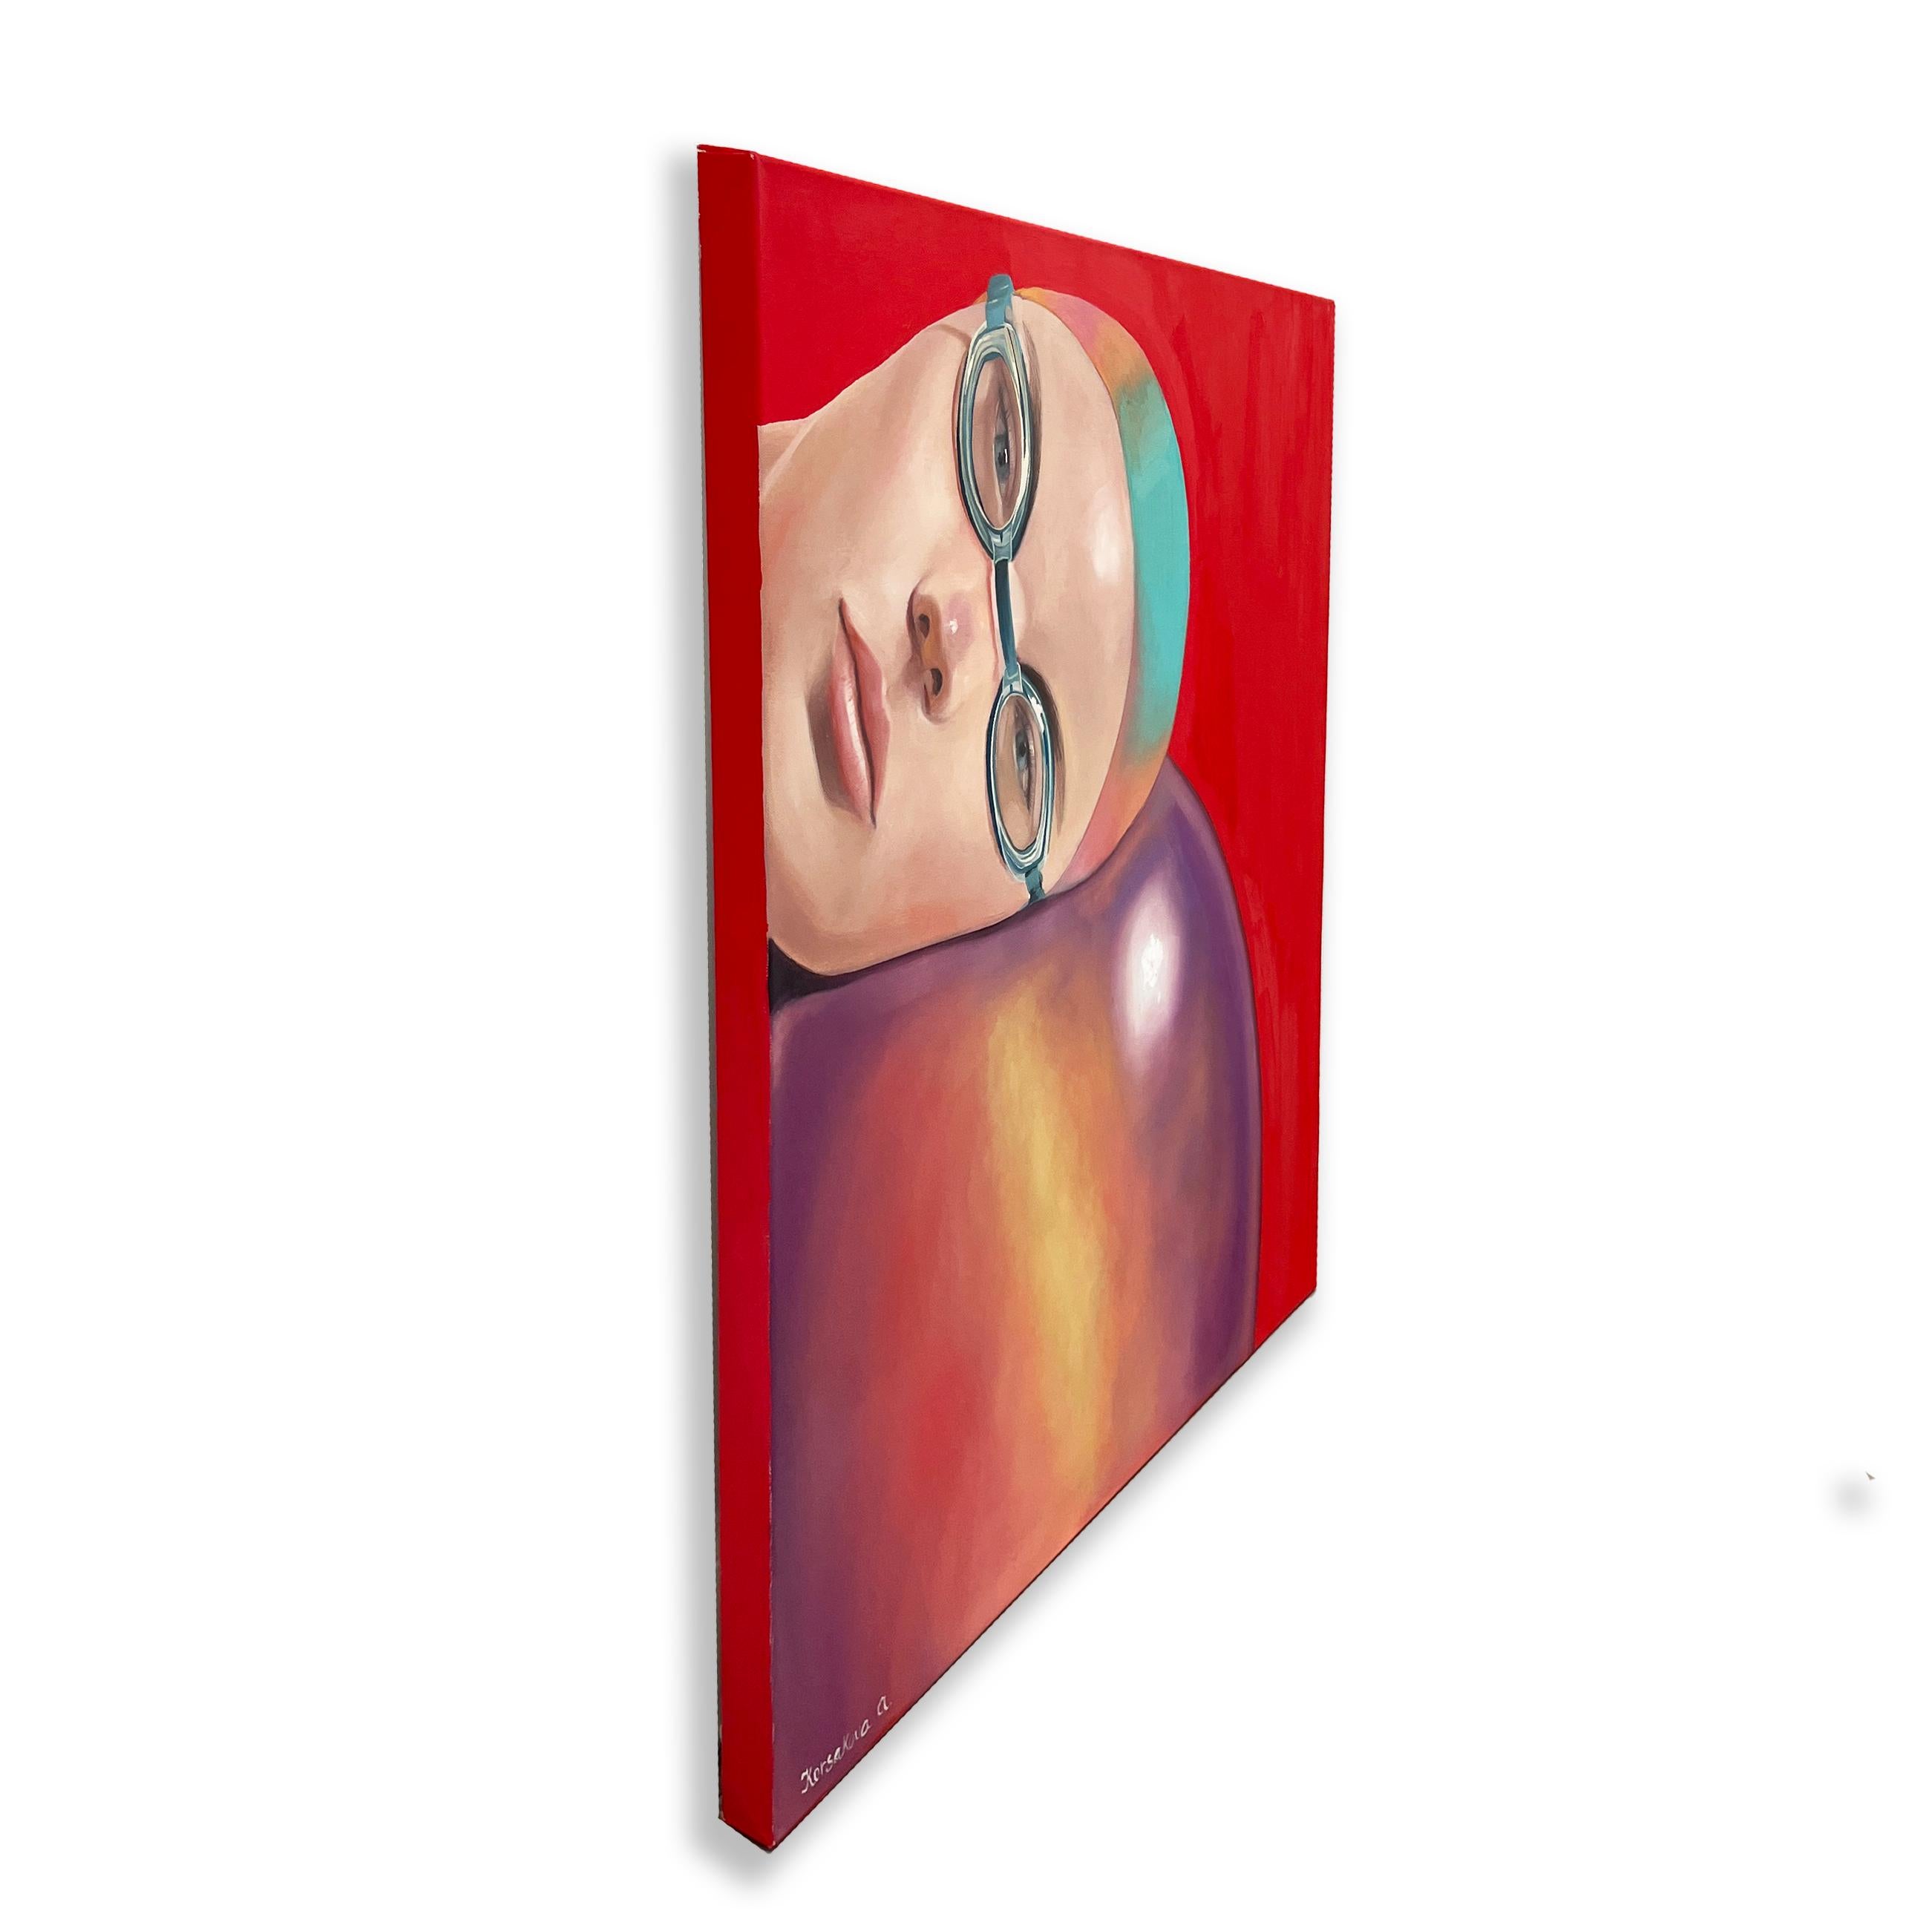 « The Shining 2 » - Peinture figurative colorée de portrait de nageuse féminine - Contemporain Art par Anastasia Korsakova